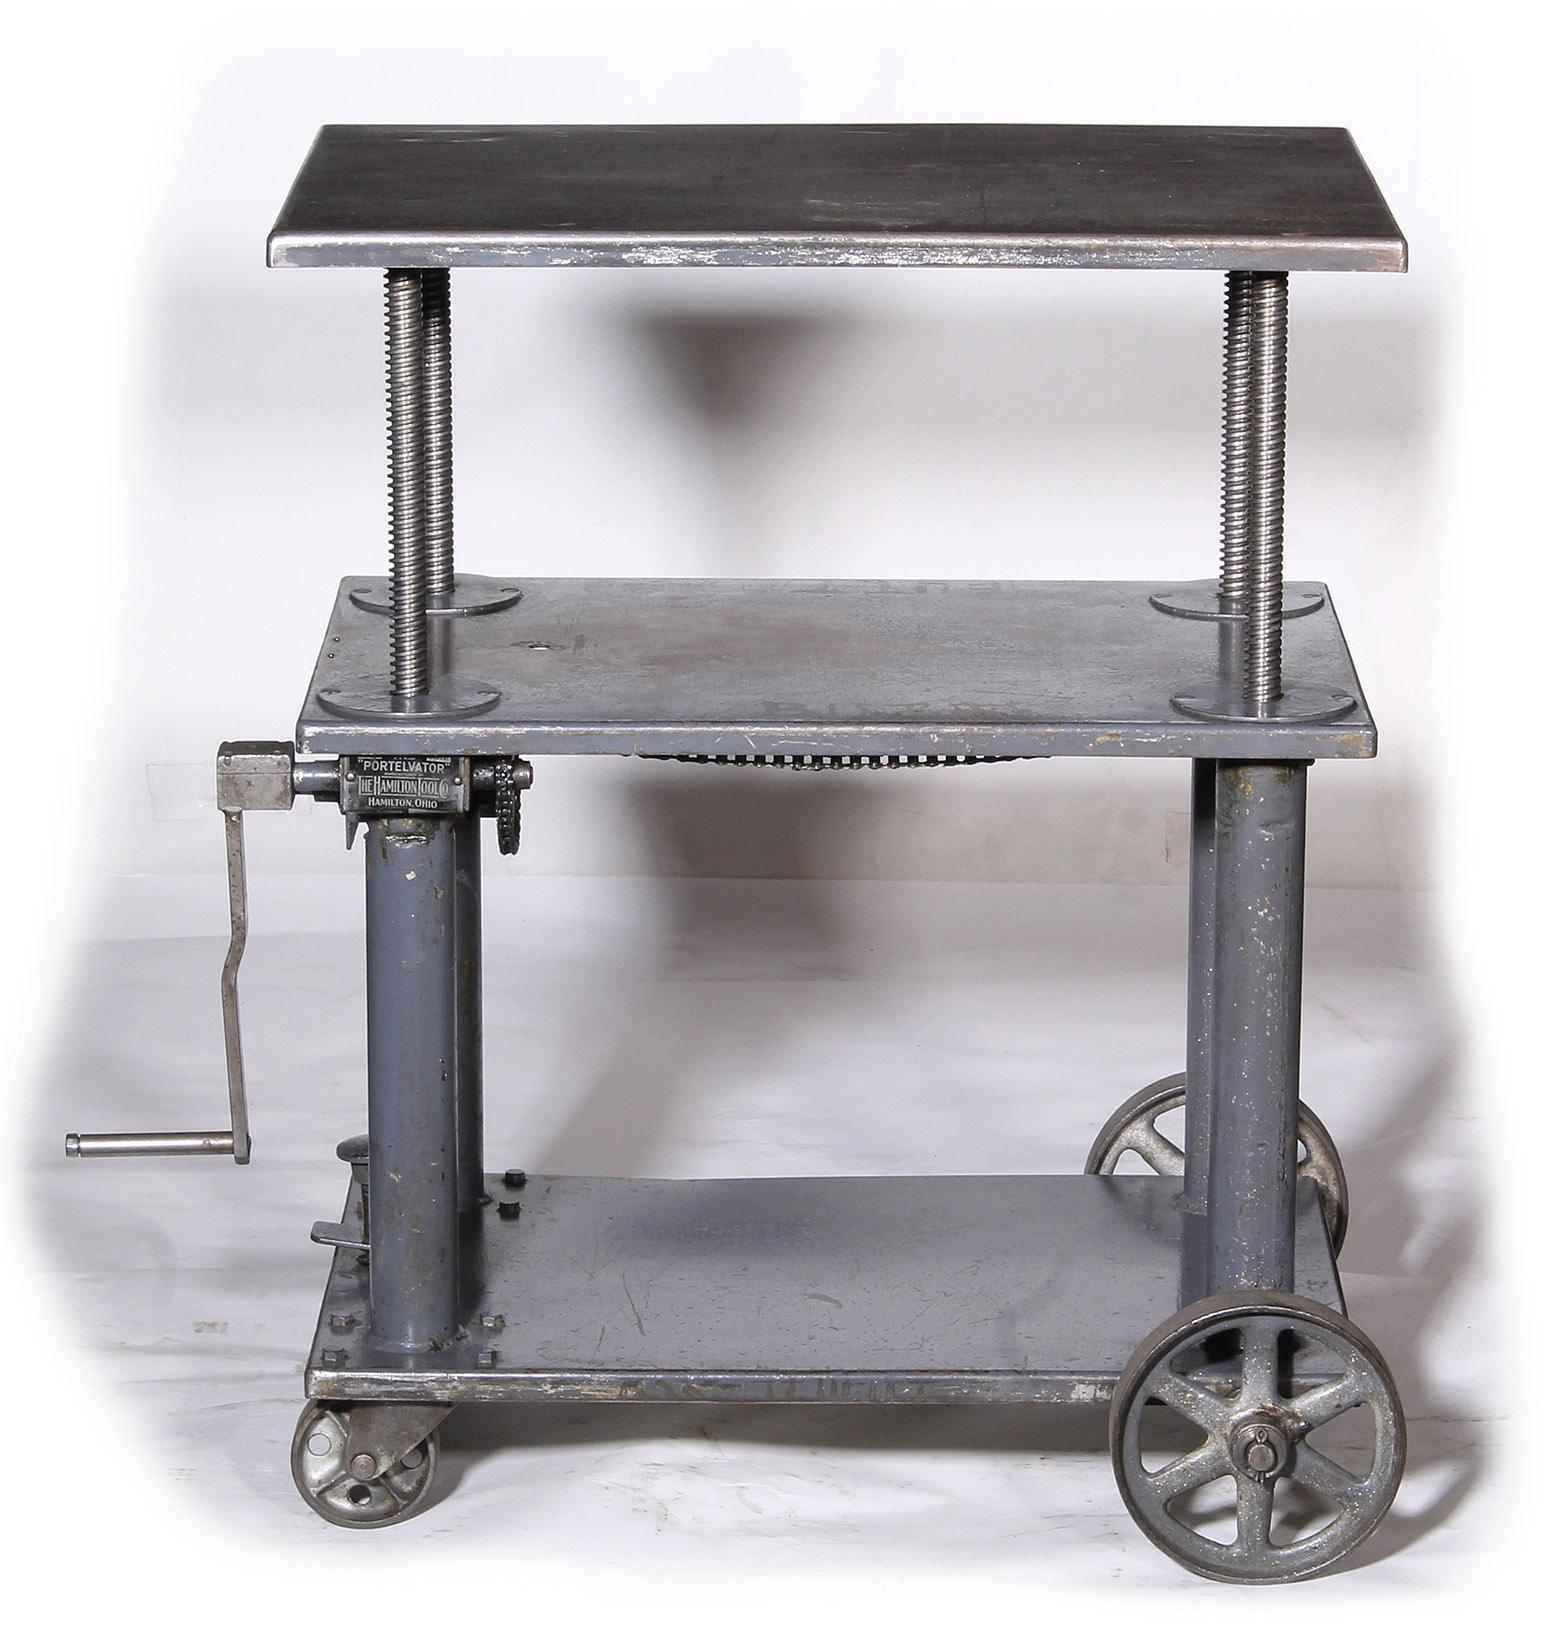 Bar cart, original steel metal rolling vintage industrial adjustable.
Height adjusts from 24